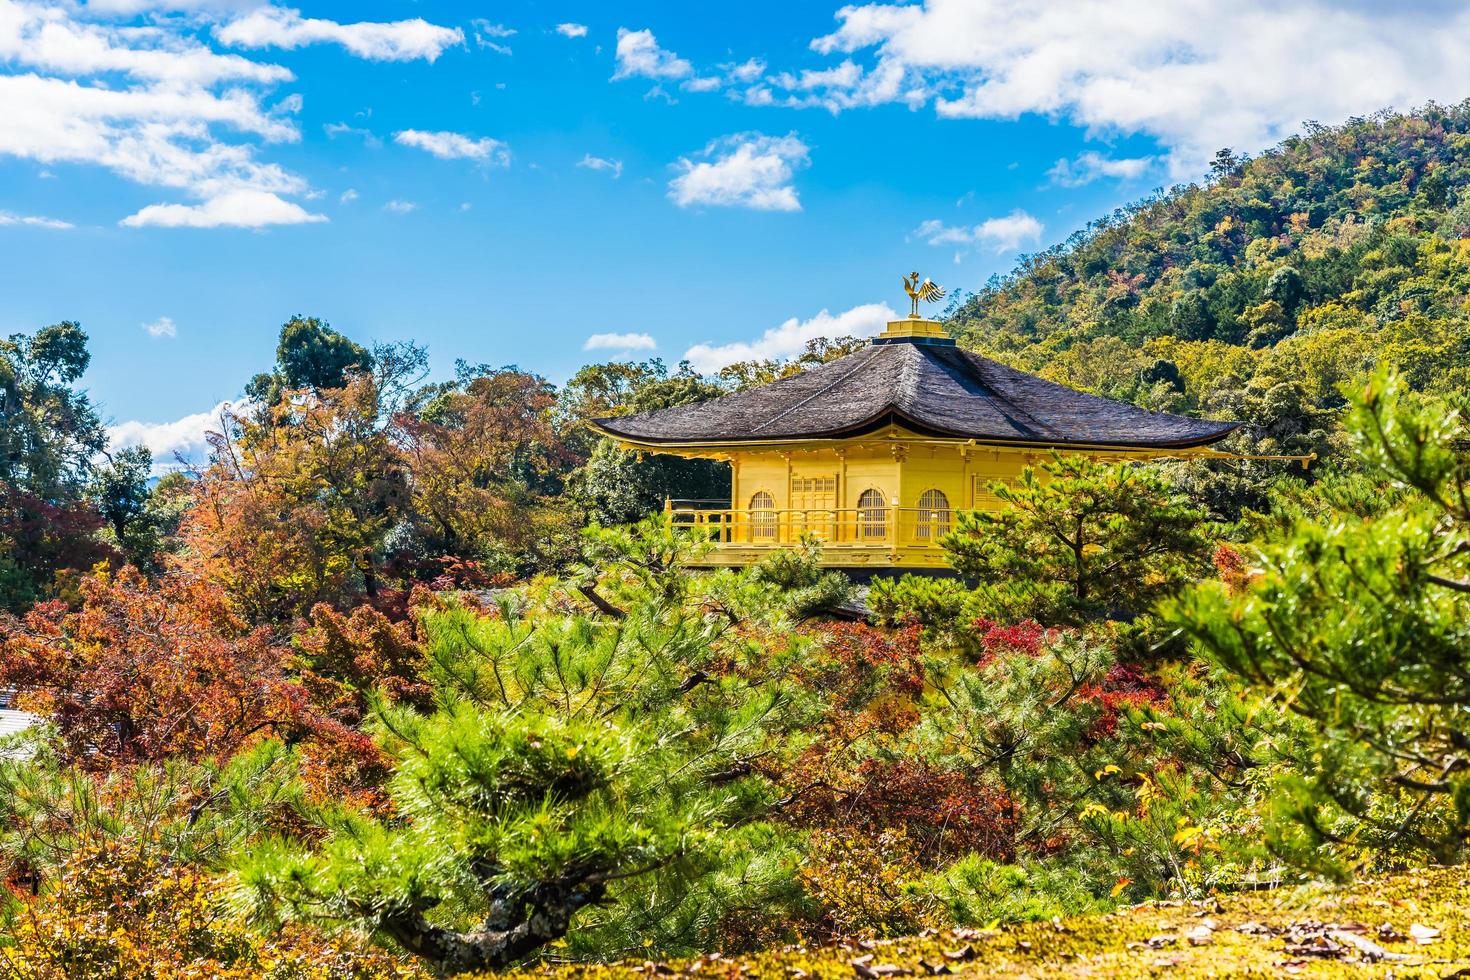 kinkakuji-tempel, of het gouden paviljoen in kyoto, japan foto